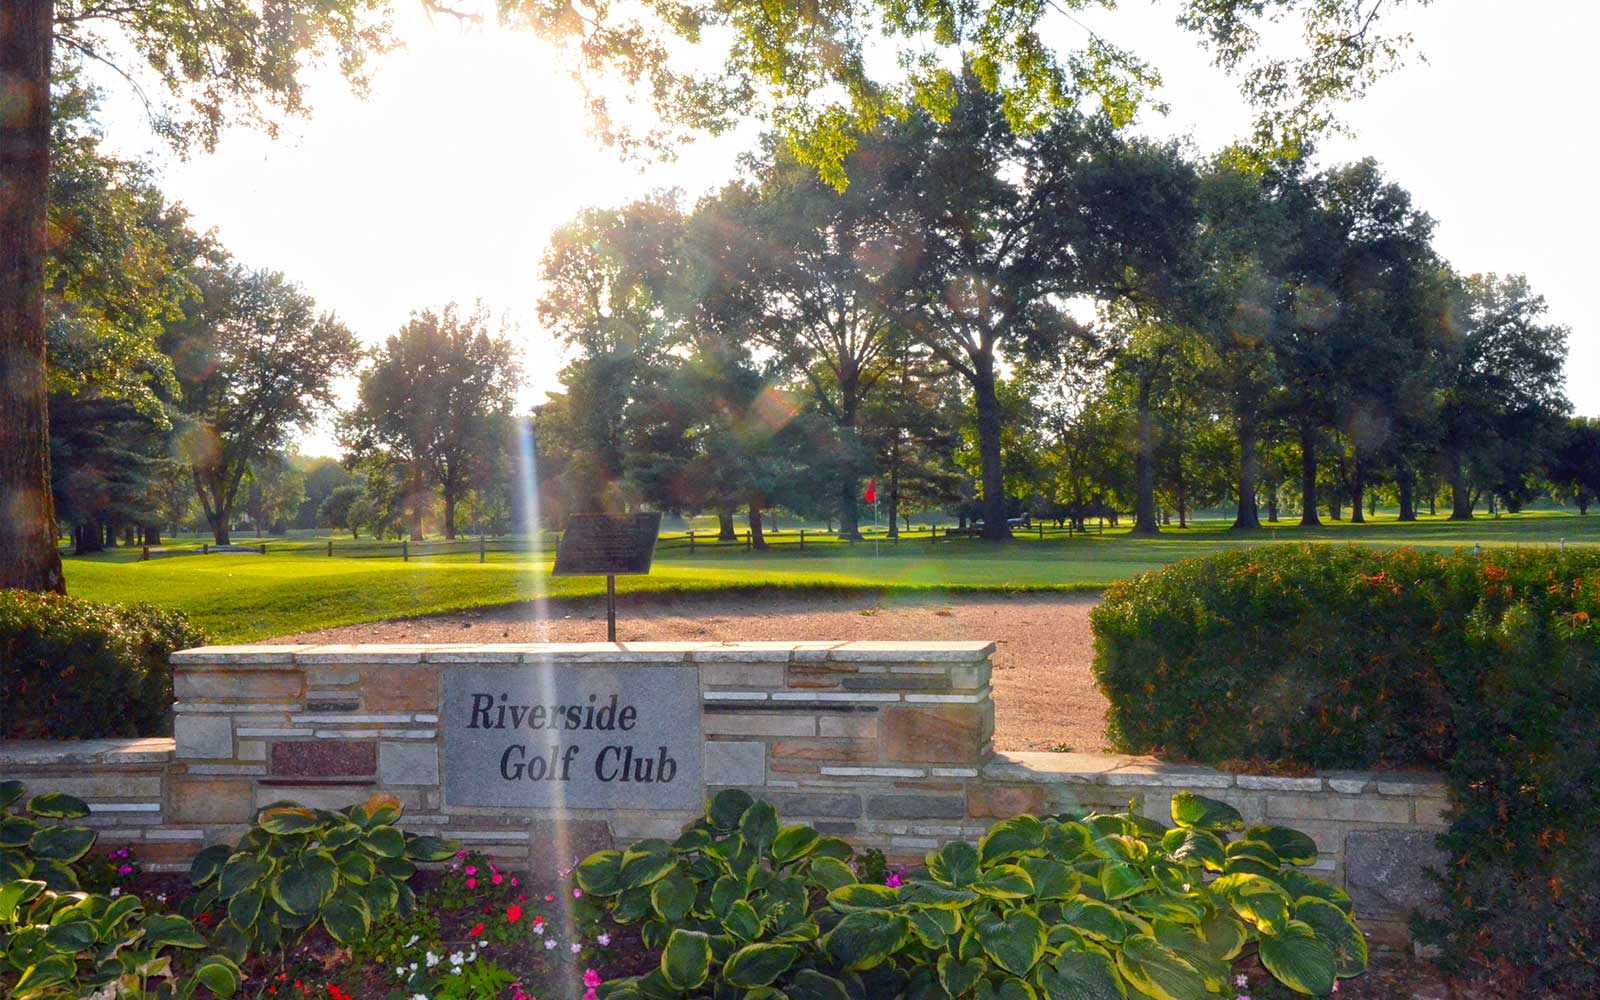 Riverside Golf Club | Best Golf Courses in St. Louis, Missouri | Reviews of Missouri Golf Courses